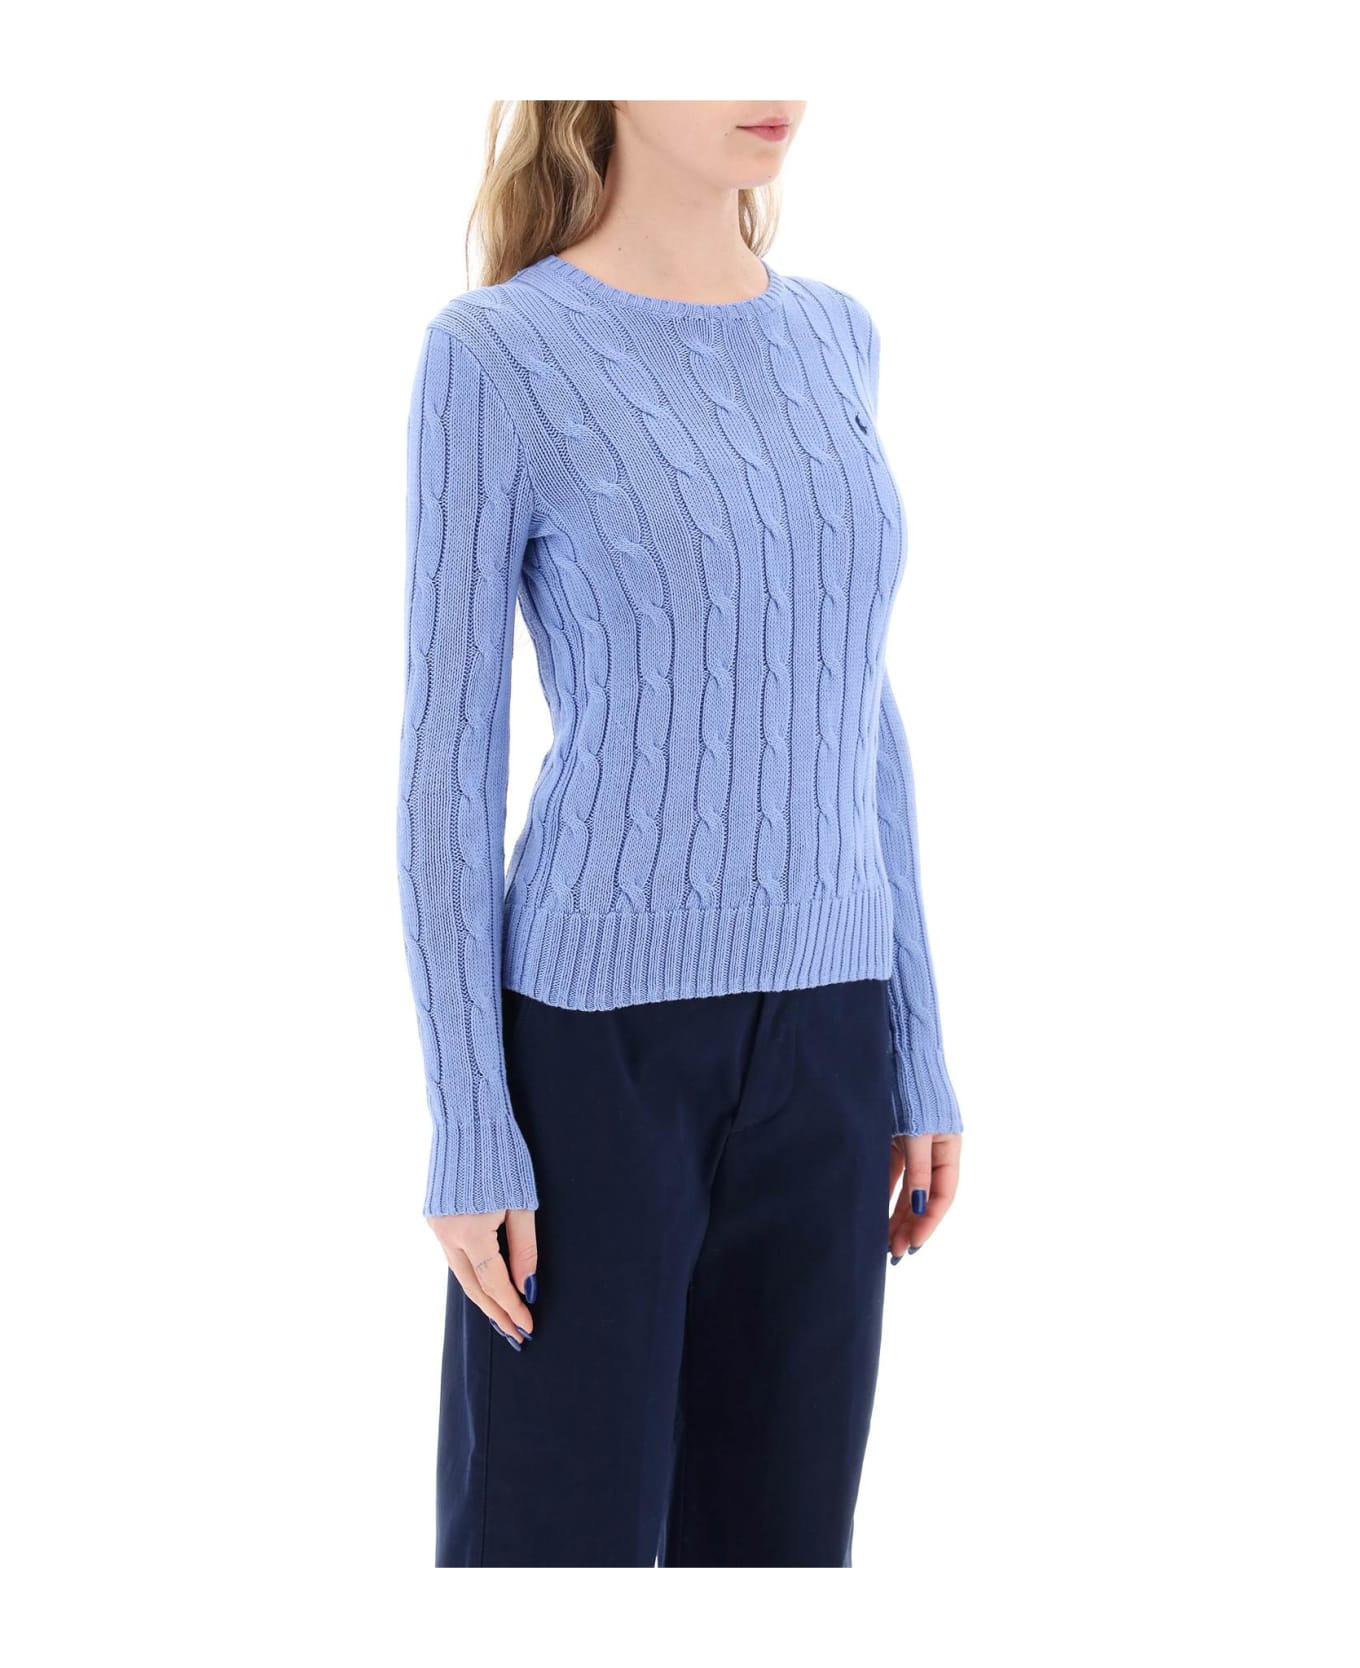 Polo Ralph Lauren Cable Knit Cotton Sweater - NEW LITCHFIELD BLUE (Light blue)